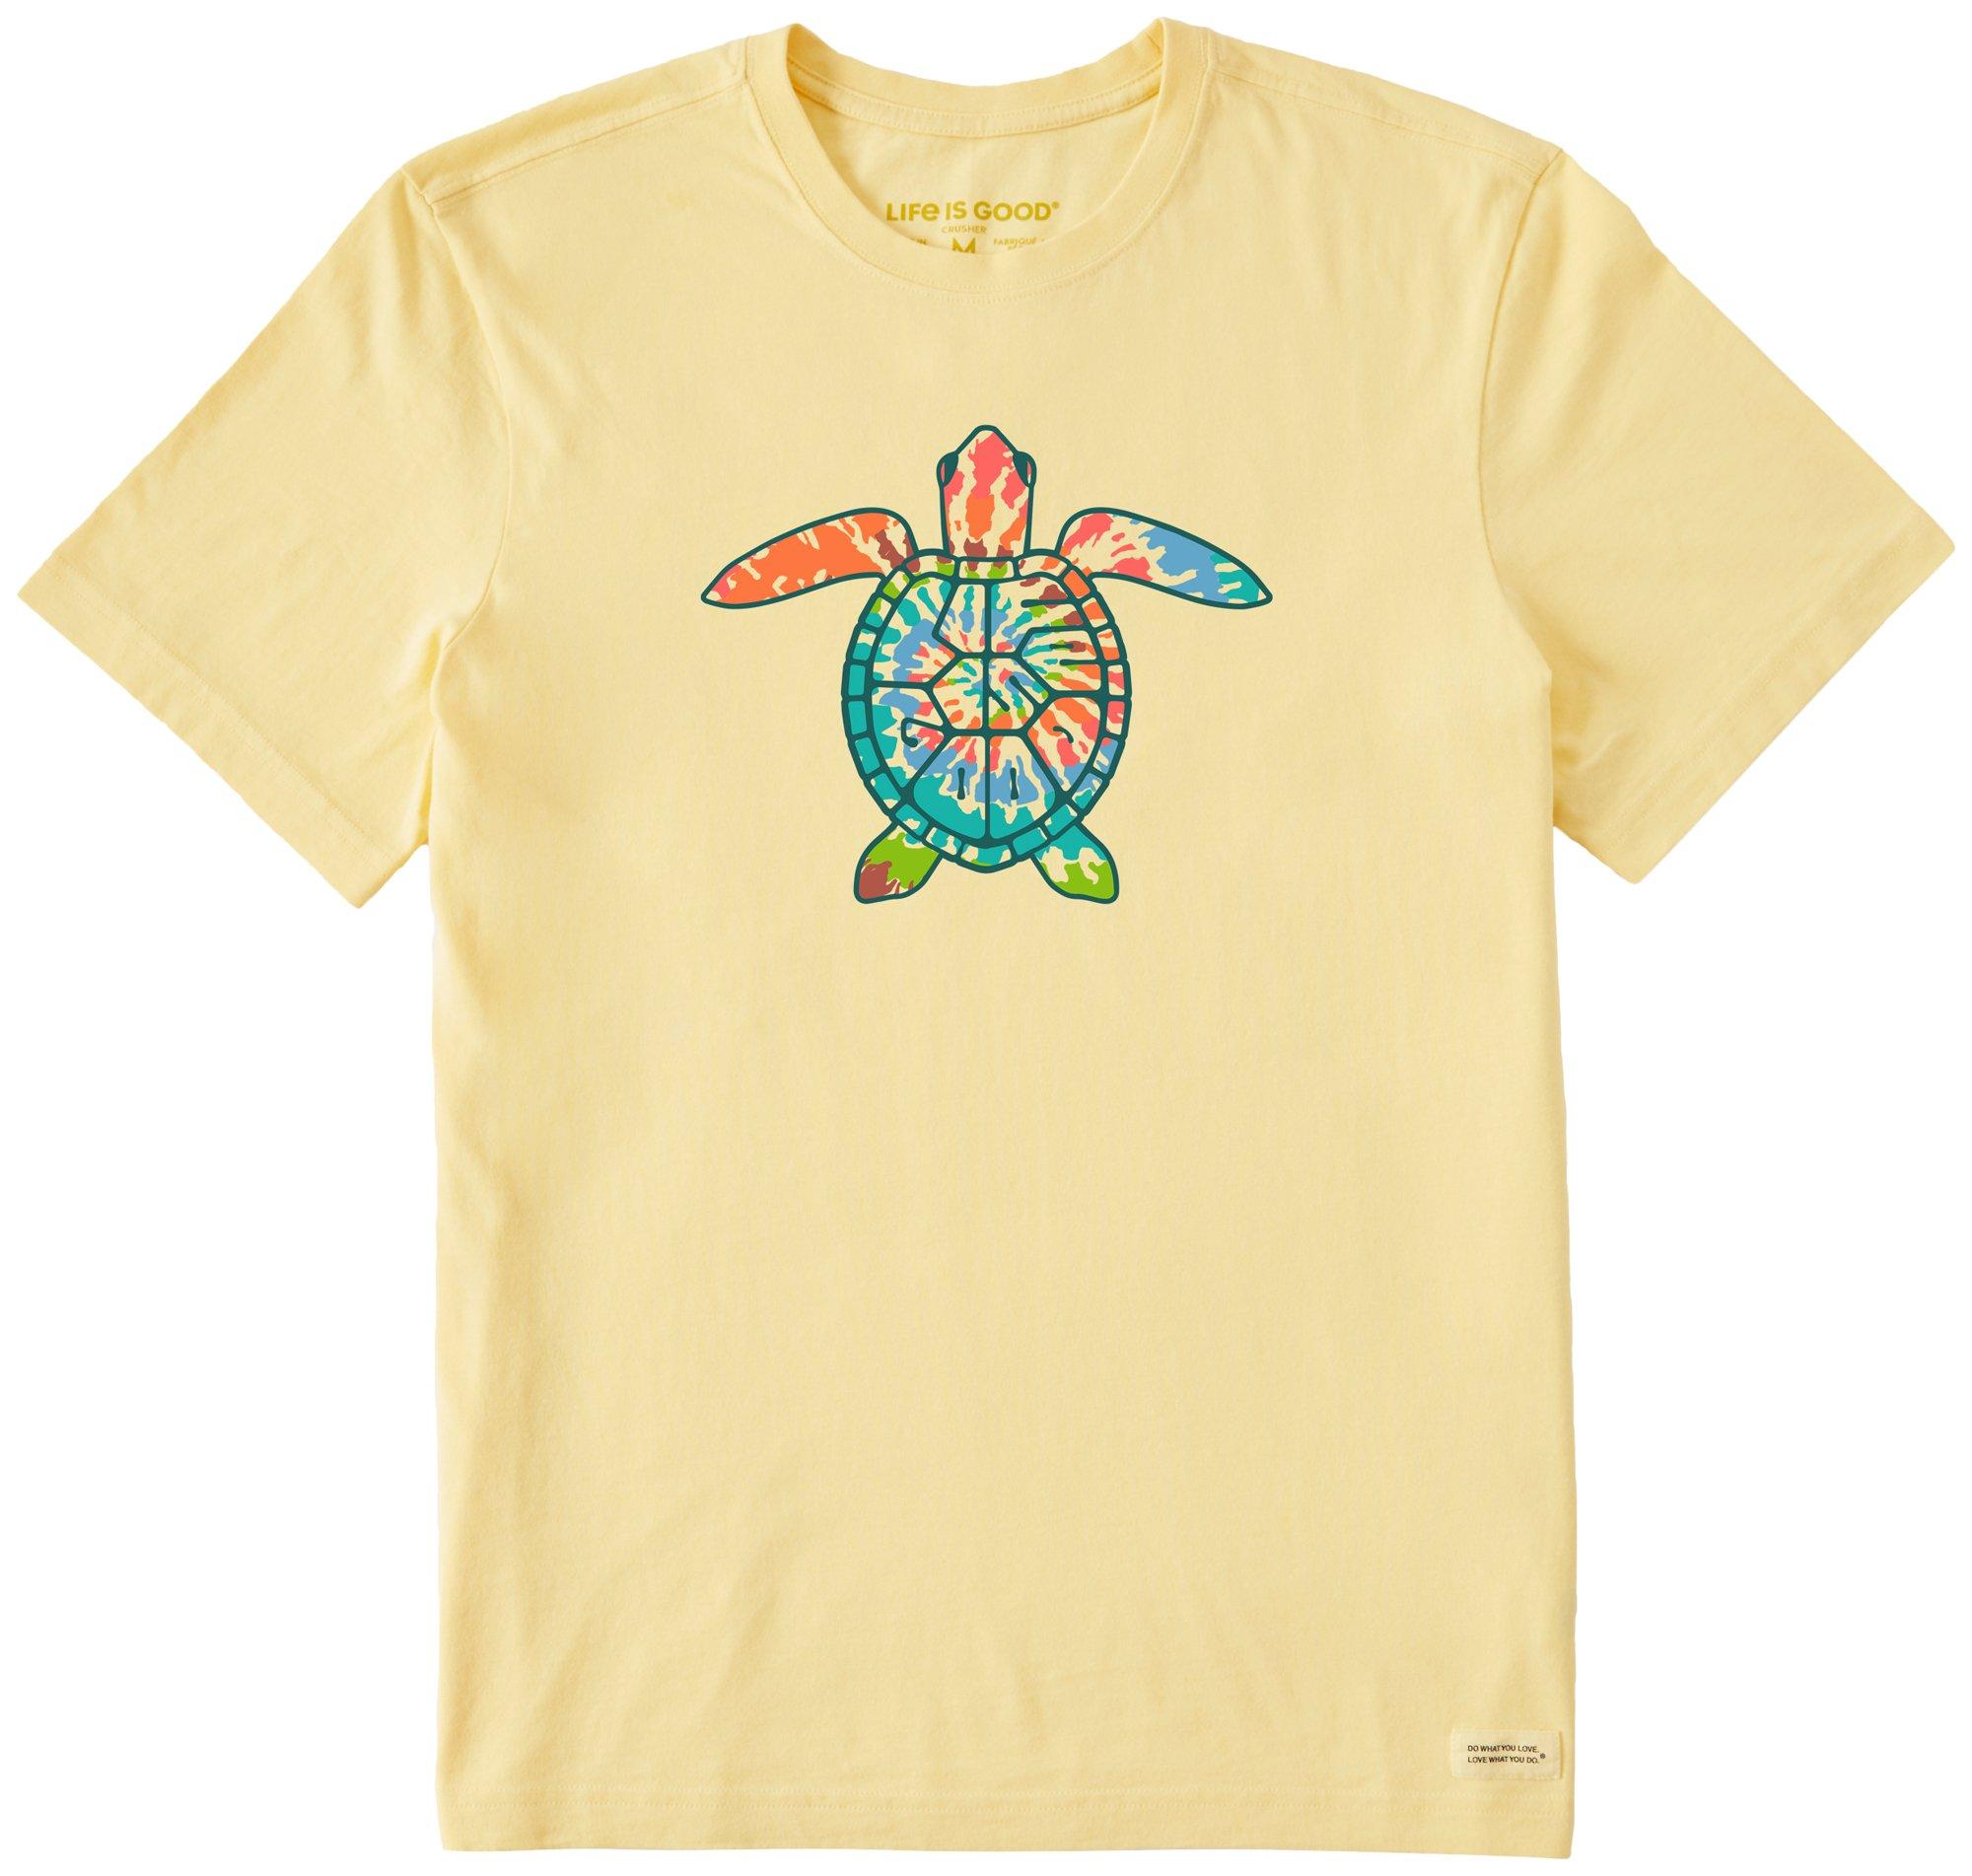 Mens Tie-Dye Turtle Shell Graphic T-Shirt